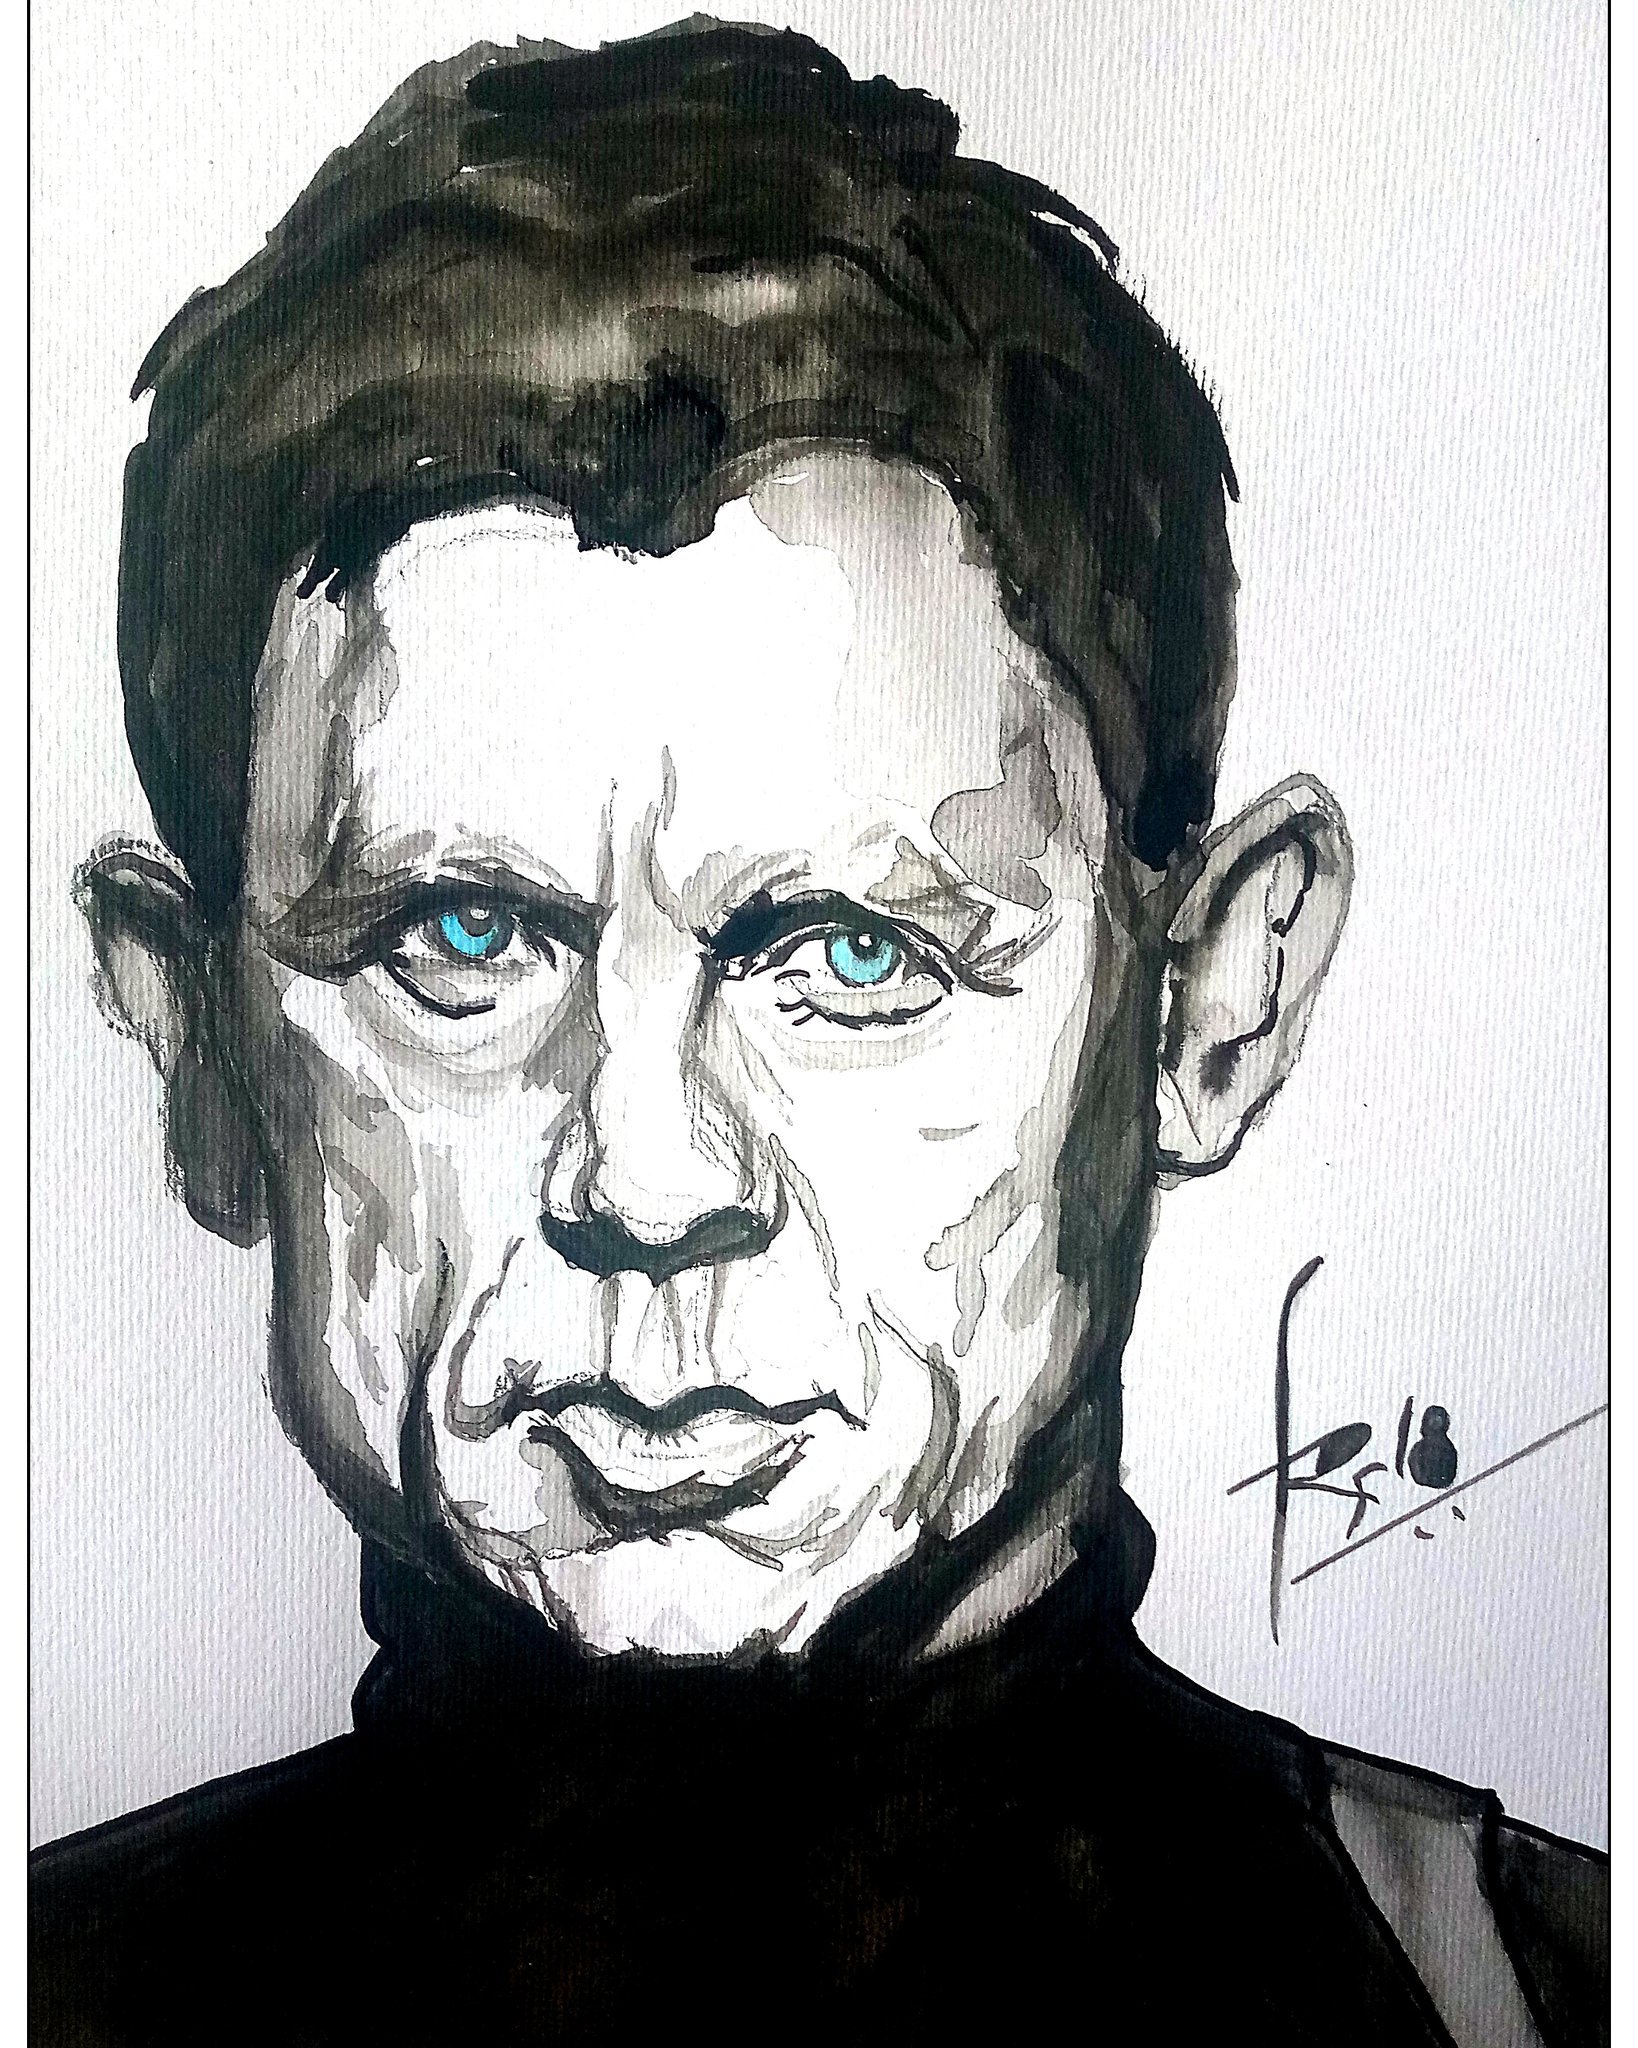 Happy birthday  Bond Craig
Watercolour on A4 fabriano paper
45 min. 